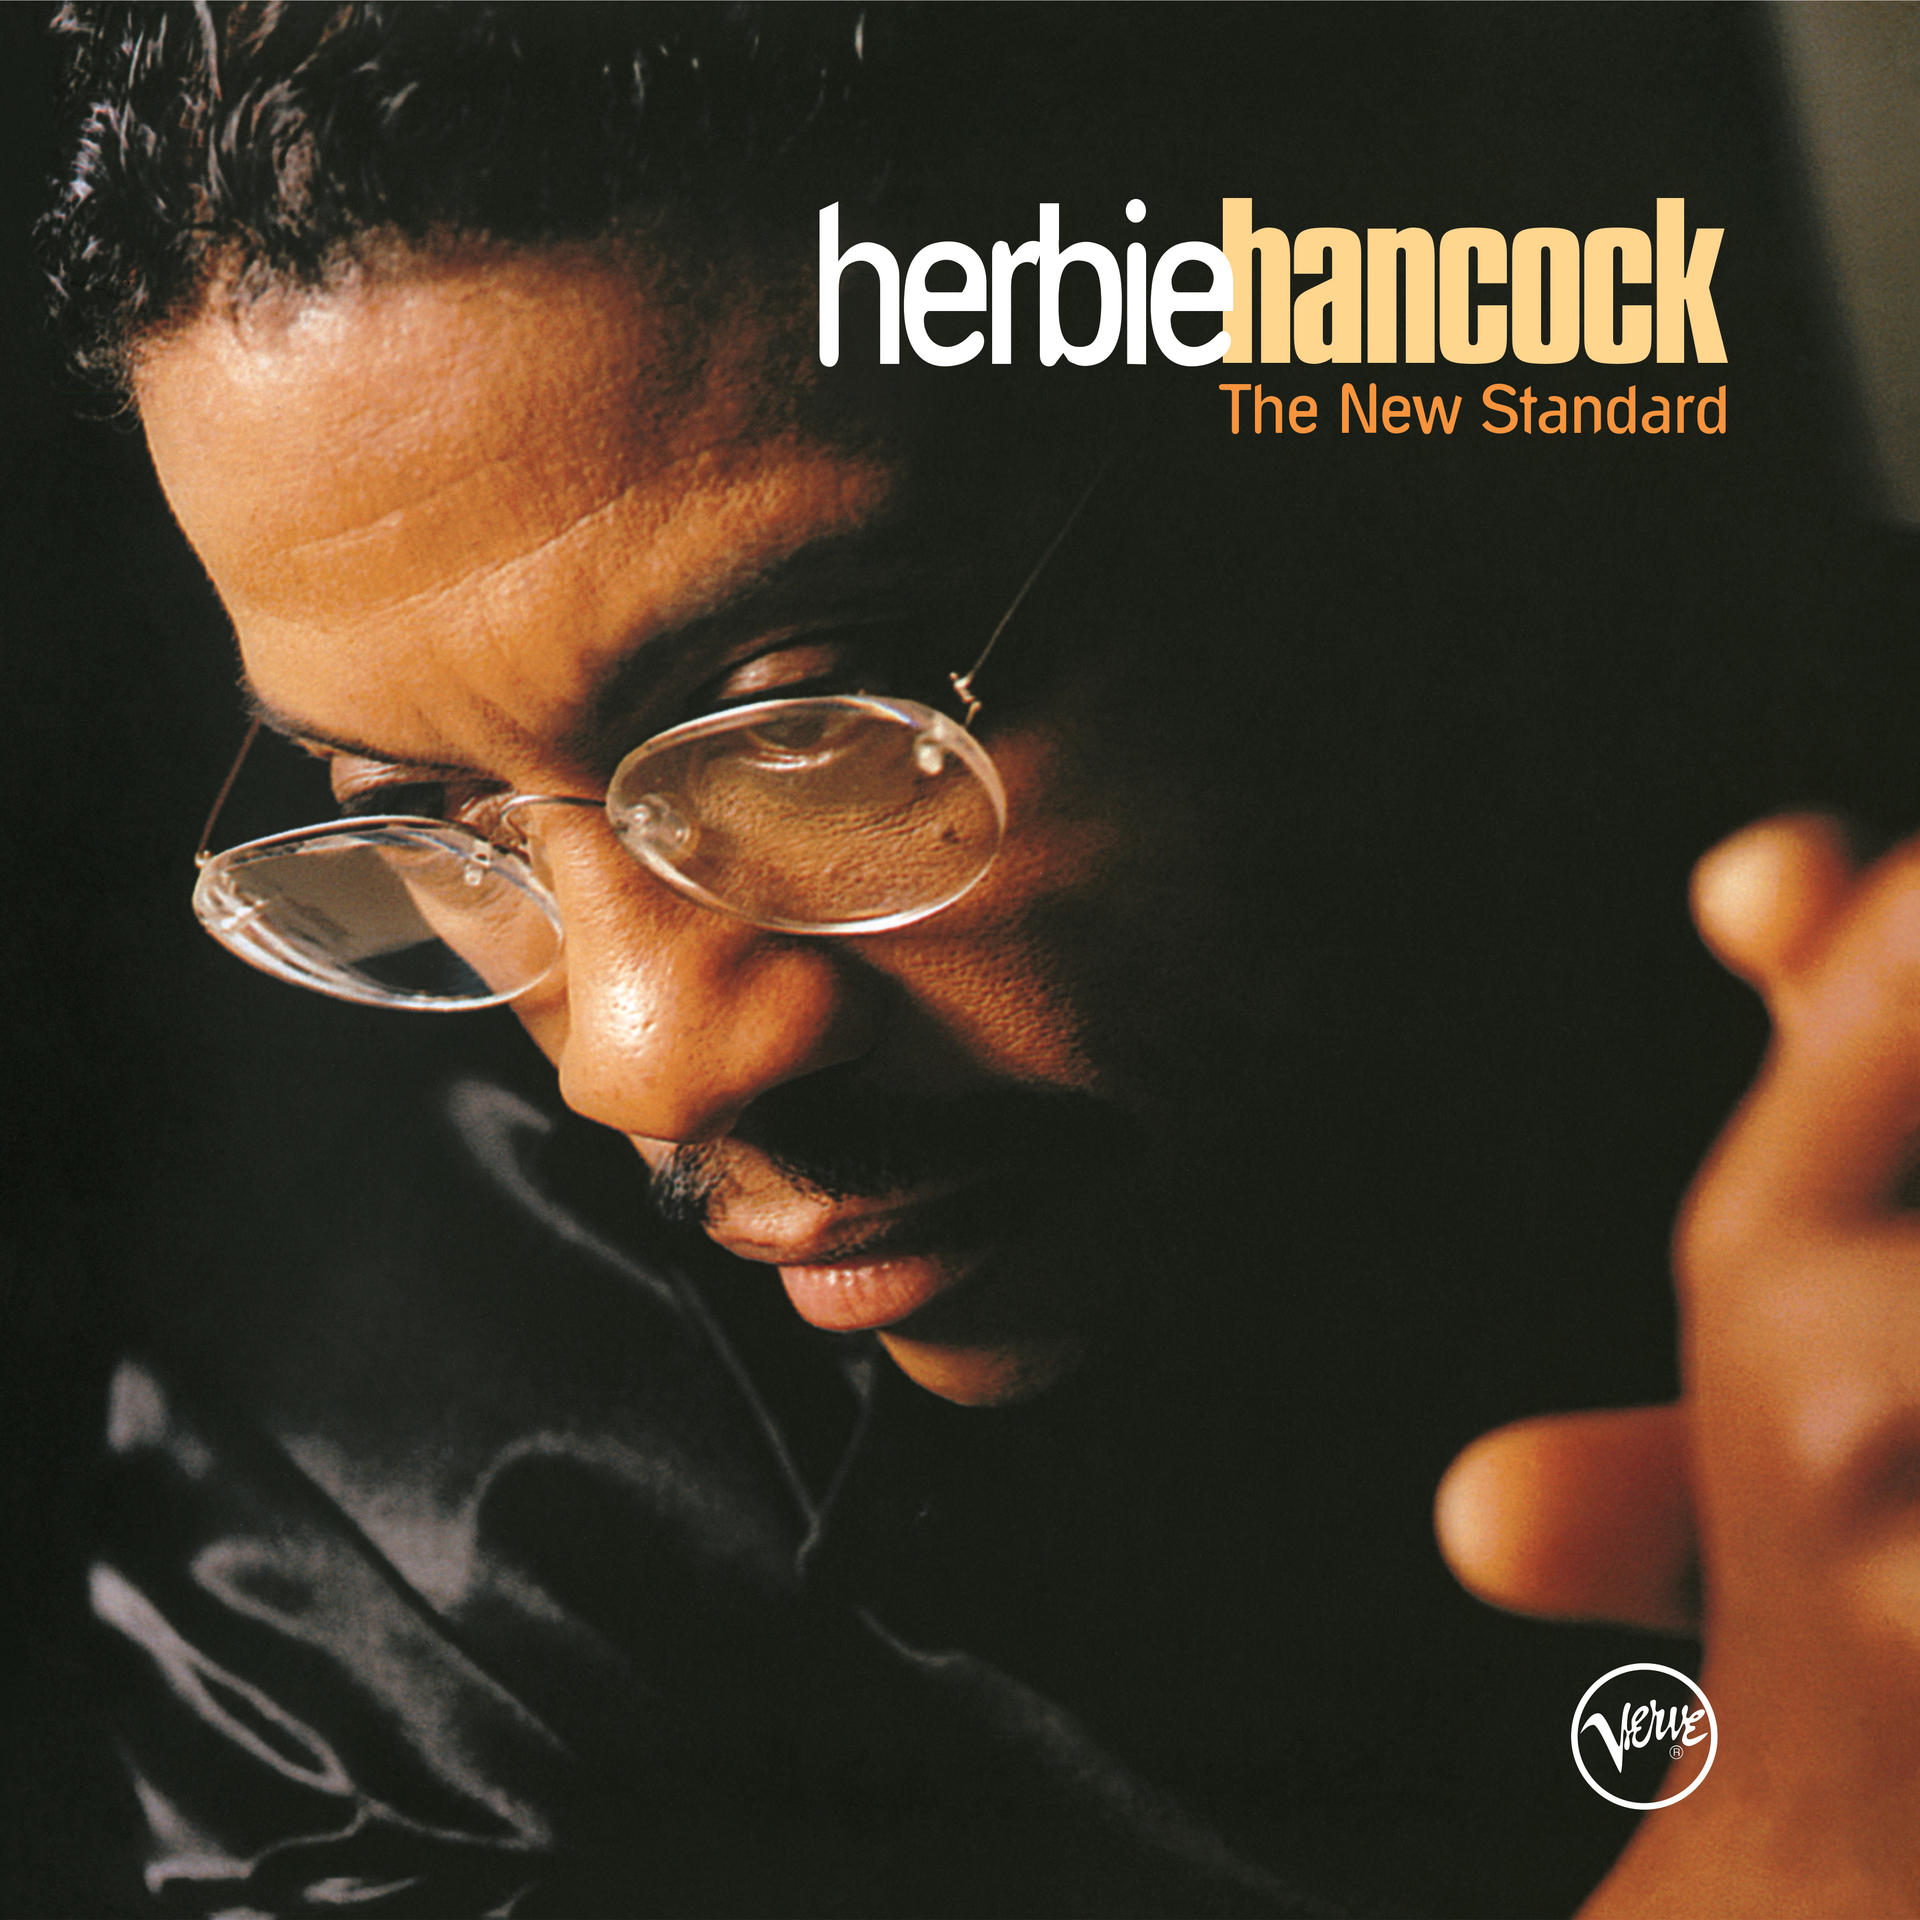 Standard Request) By Hancock The New (Verve - - Herbie (Vinyl)